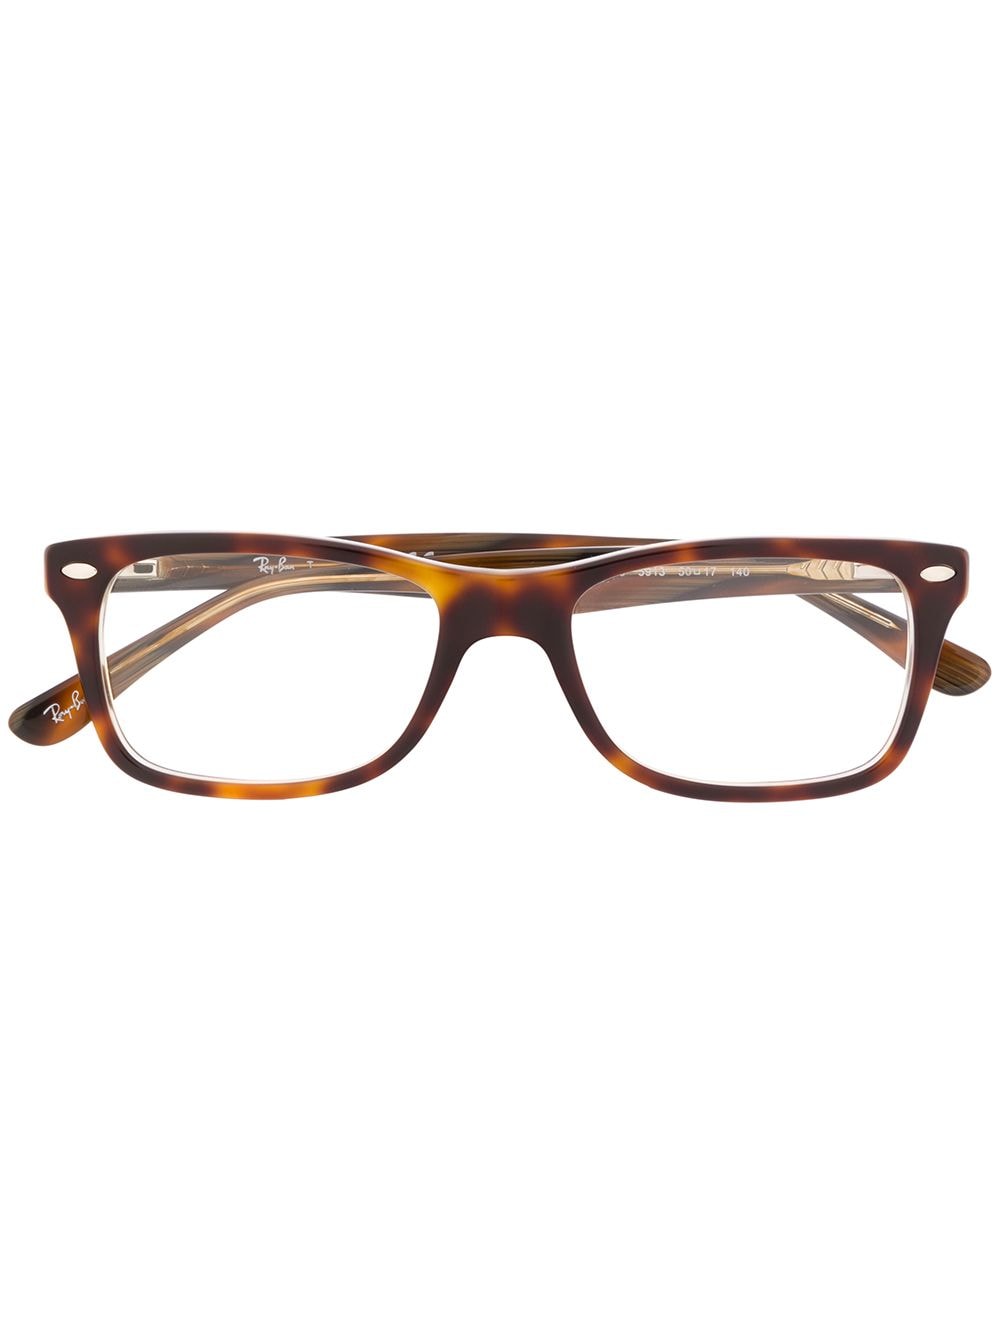 Ray-Ban tortoiseshell square frame glasses - Brown von Ray-Ban